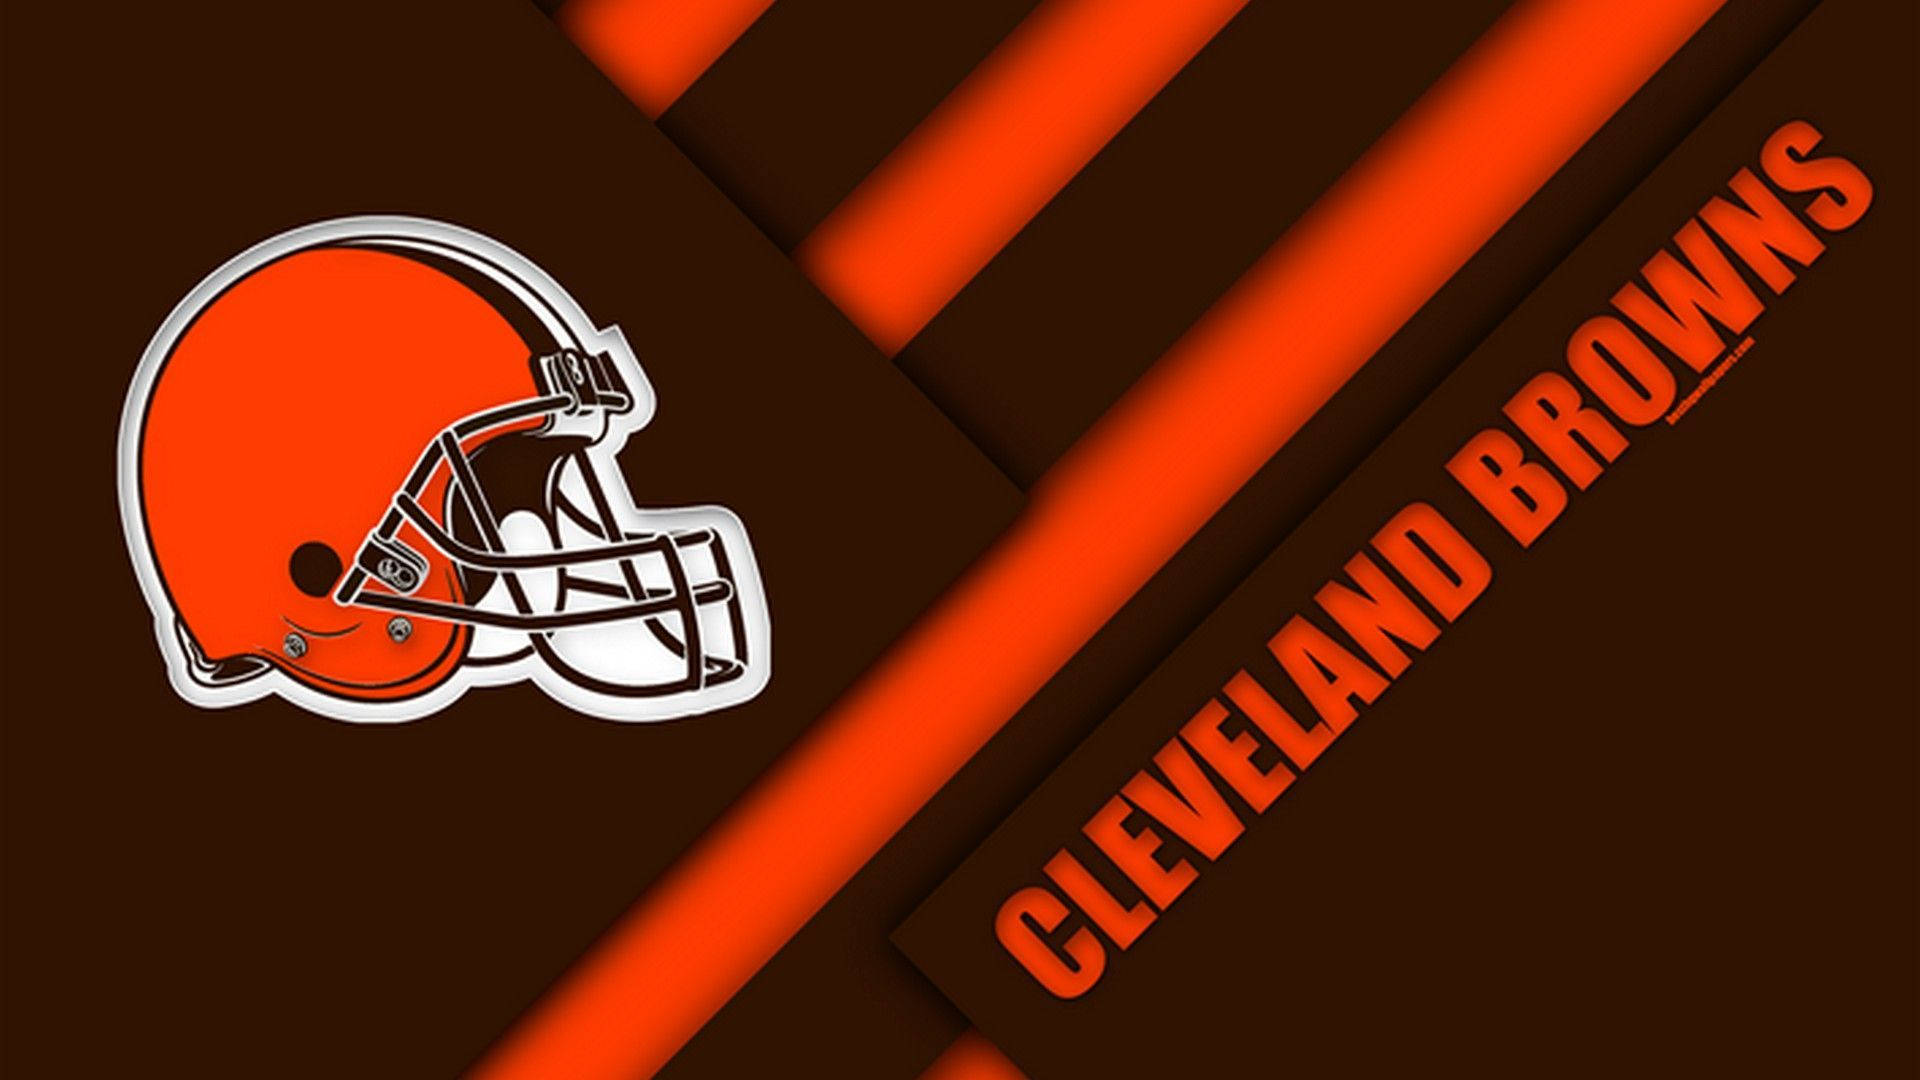 Cleveland Browns' Helmet